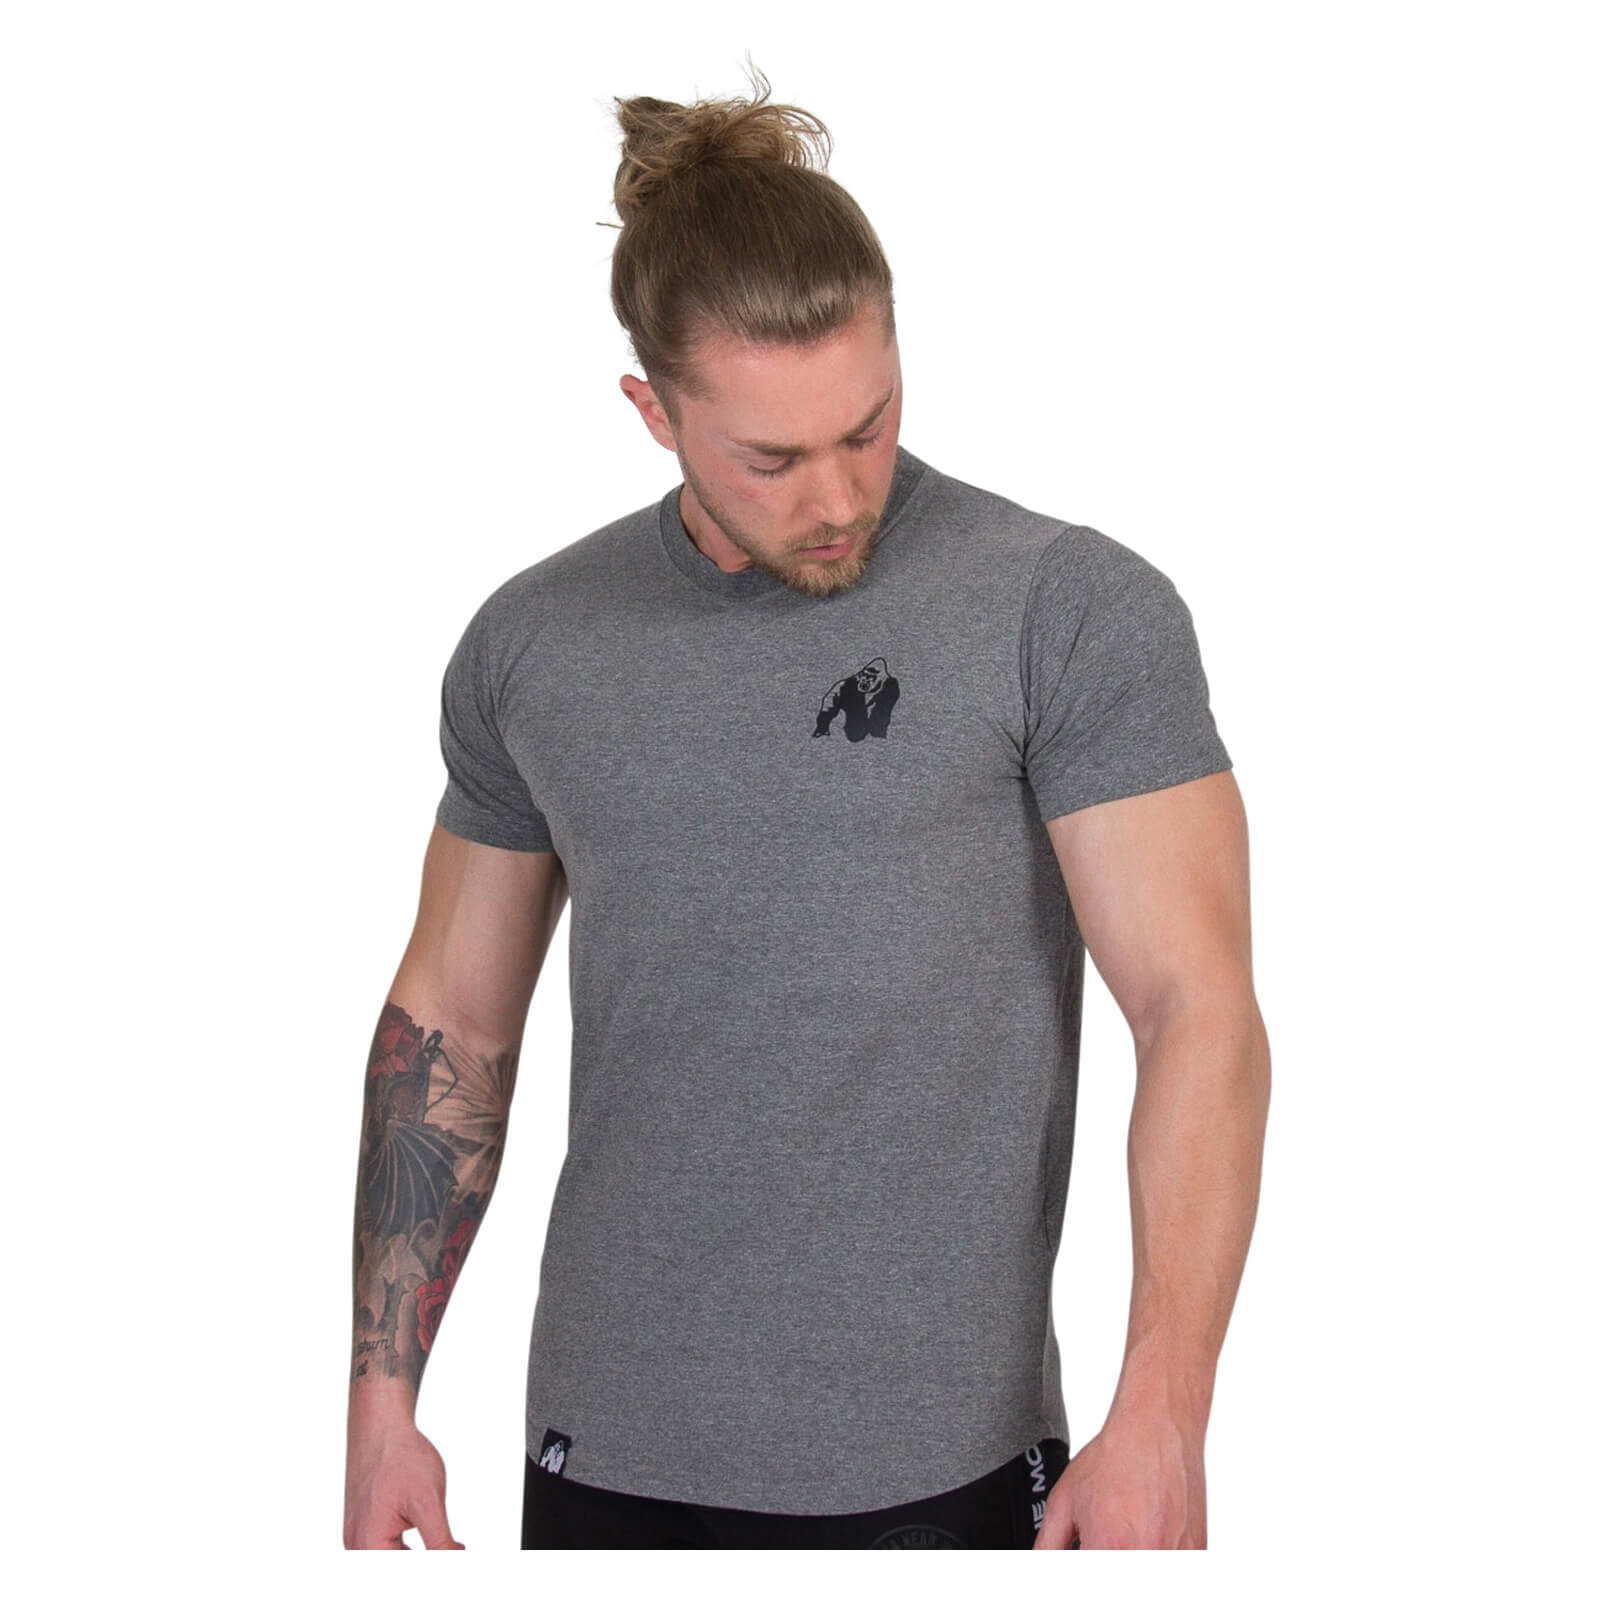 Kolla in Bodega T-Shirt, grey, Gorilla Wear hos SportGymButiken.se